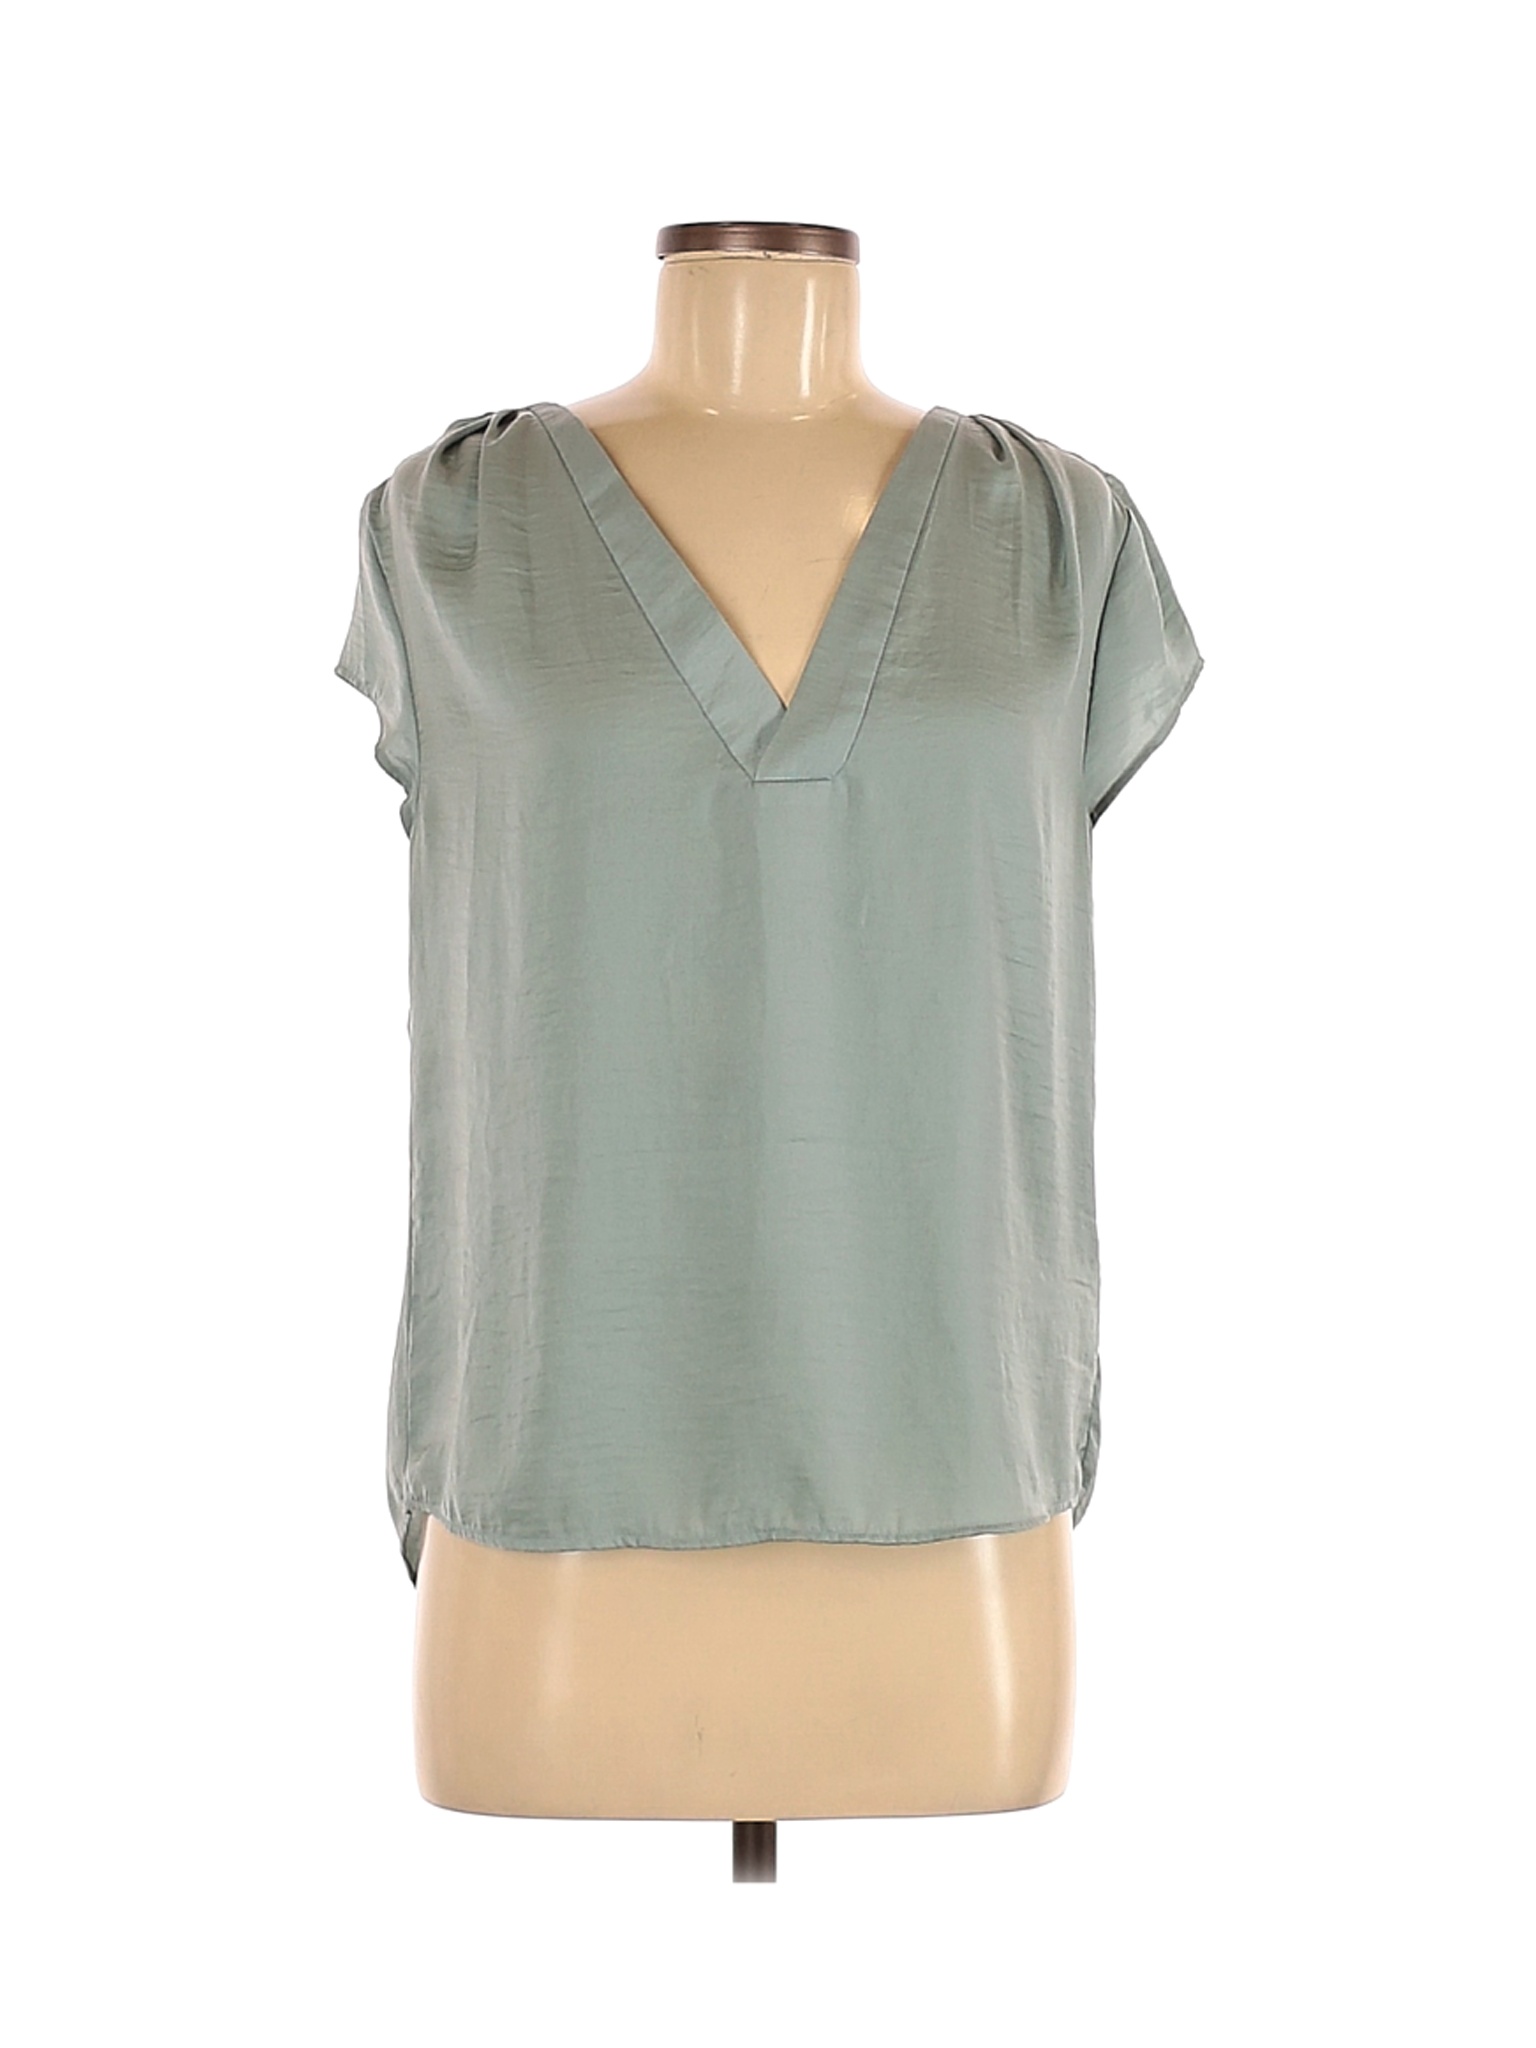 H&M Women Green Short Sleeve Blouse 6 | eBay